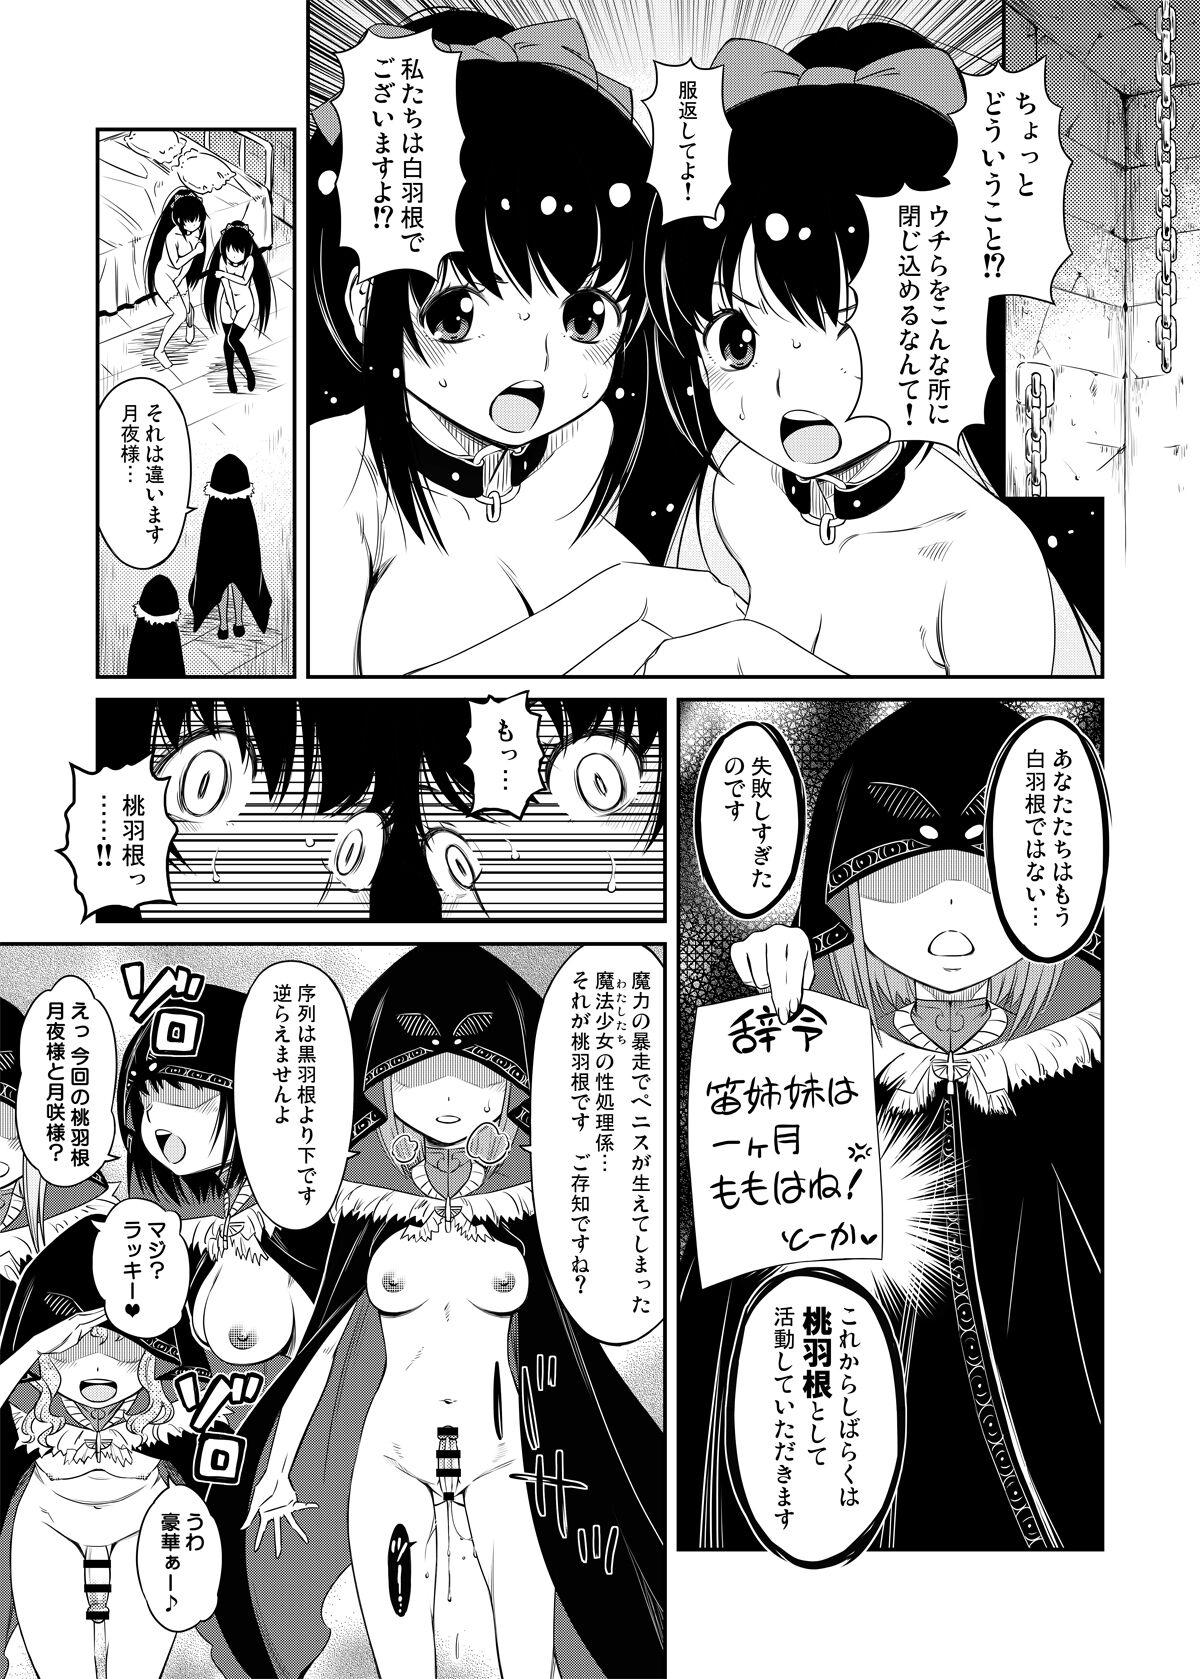 Gorgeous The Amane sisters' Erotic Manga - Puella magi madoka magica side story magia record Lesbians - Picture 1